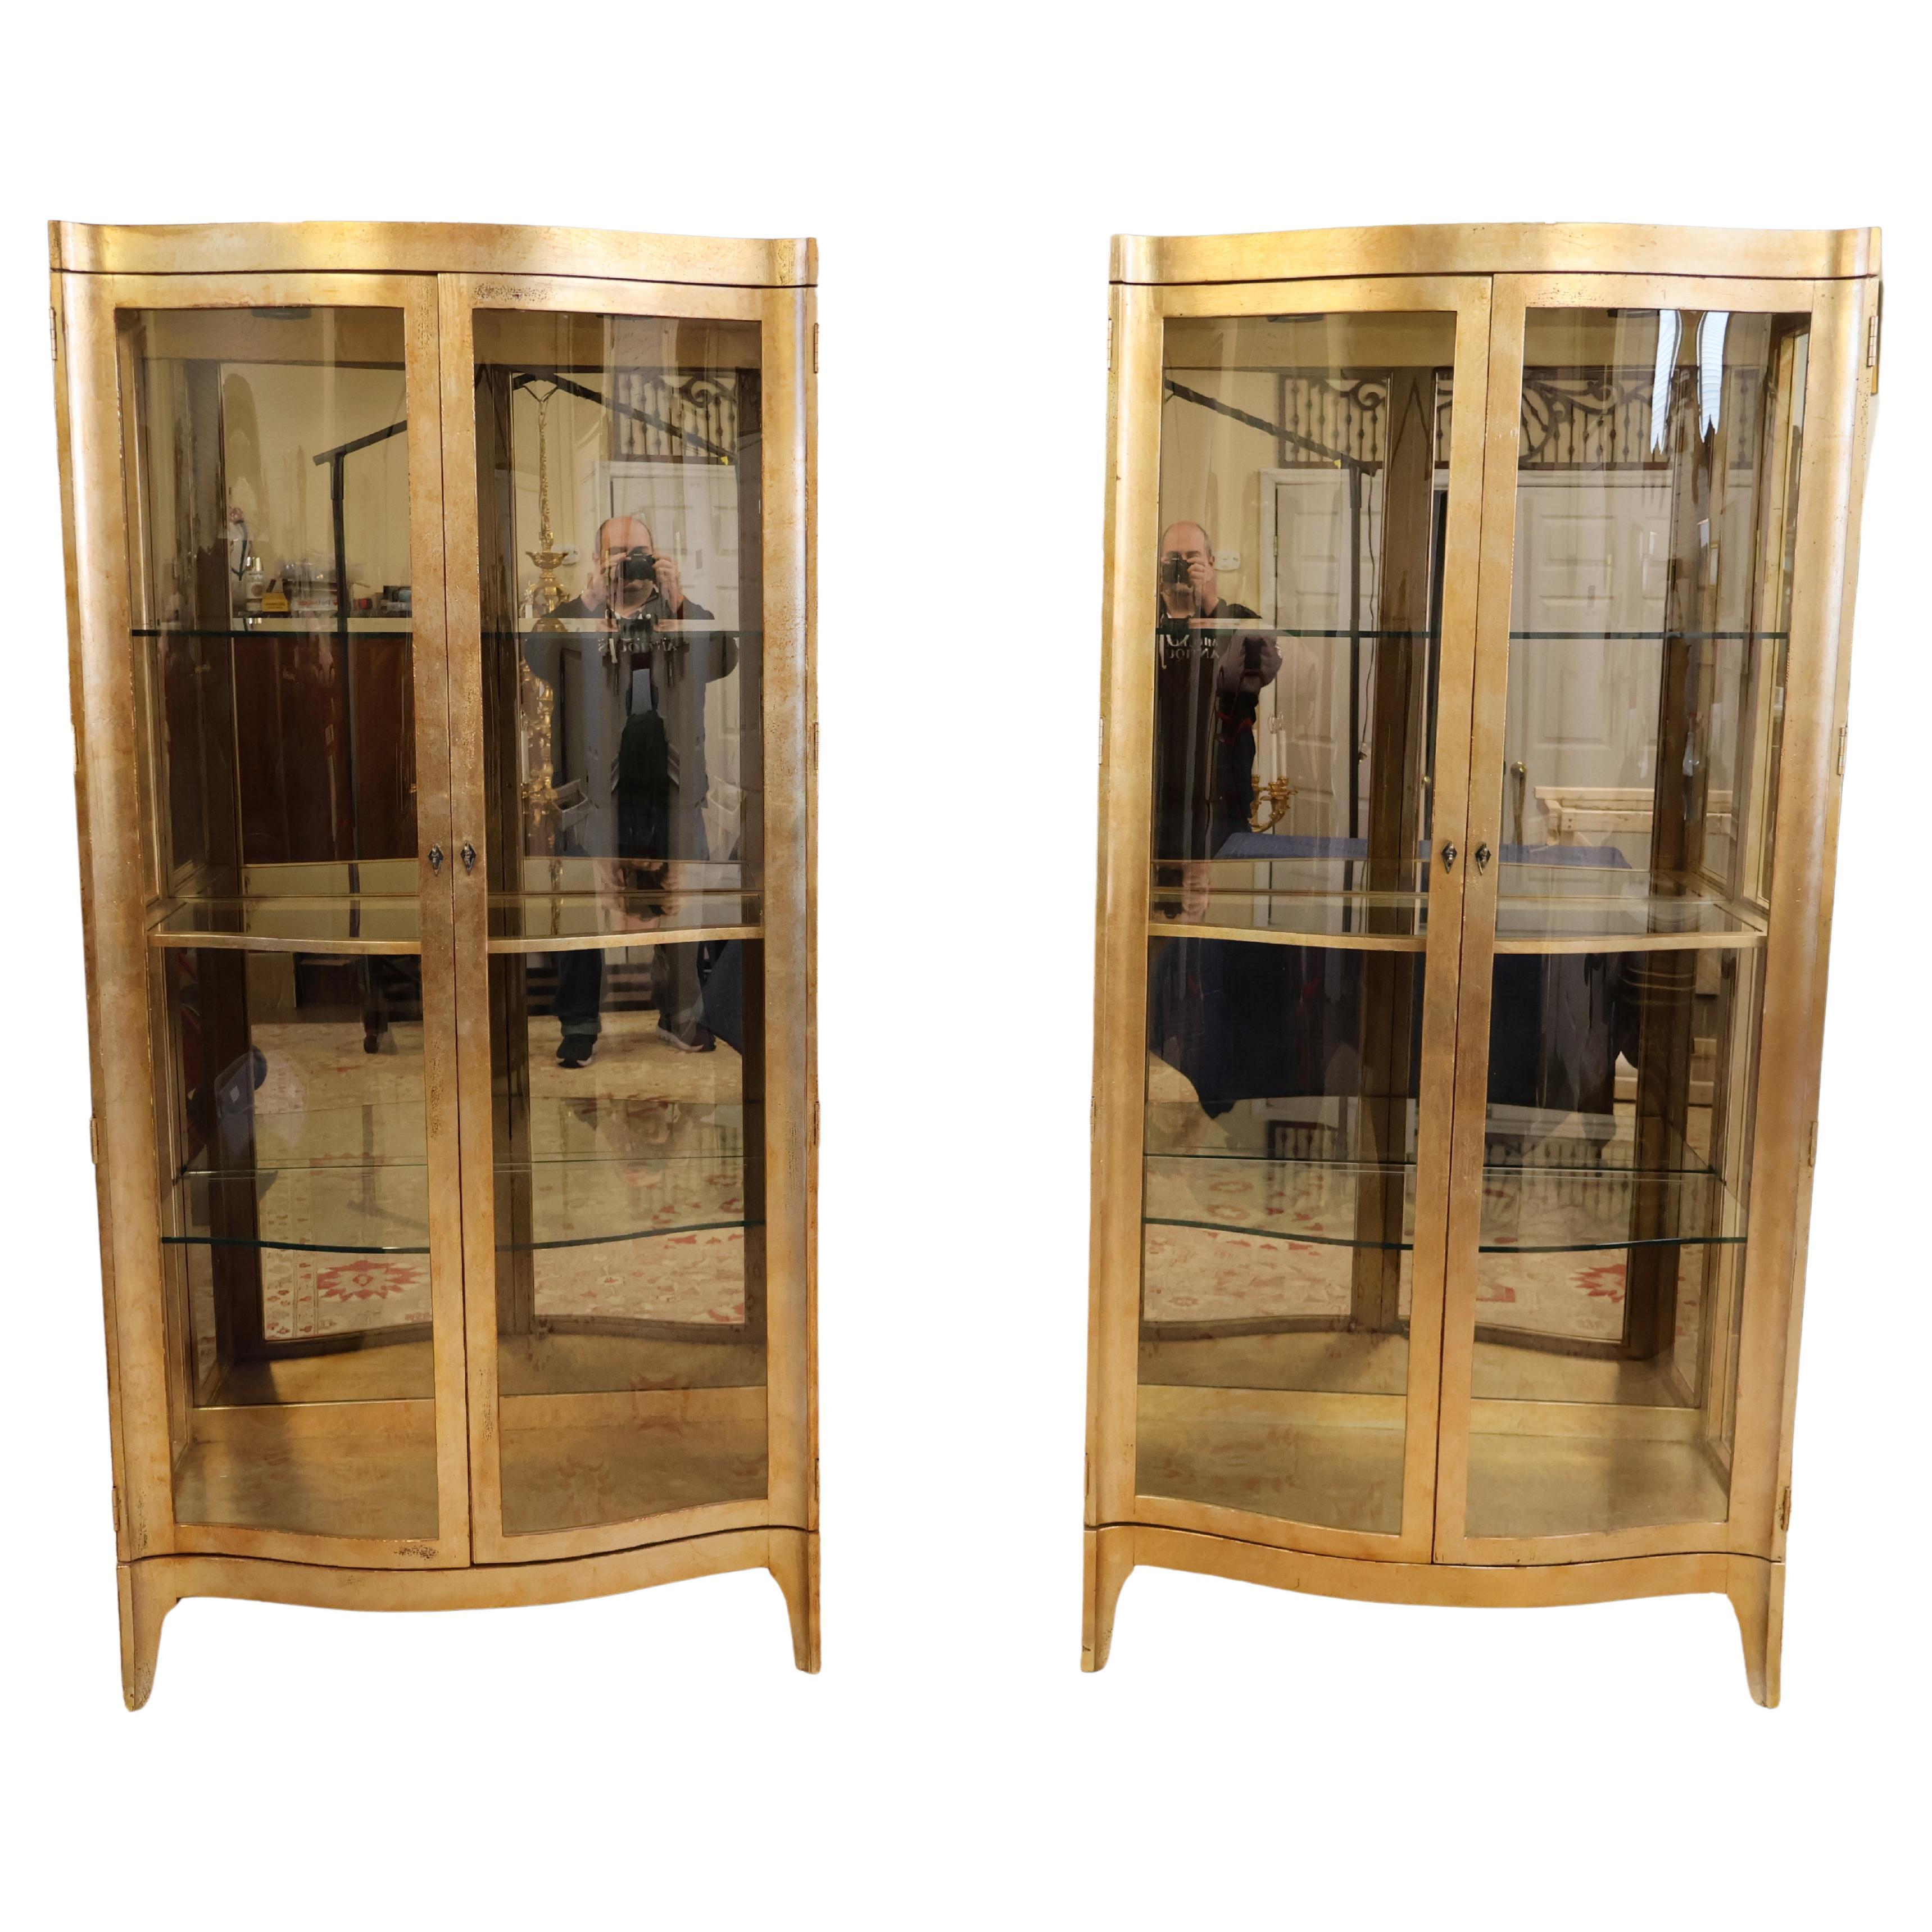 Pair of Henredon Gold Leaf Finish China Curio Display Cabinets